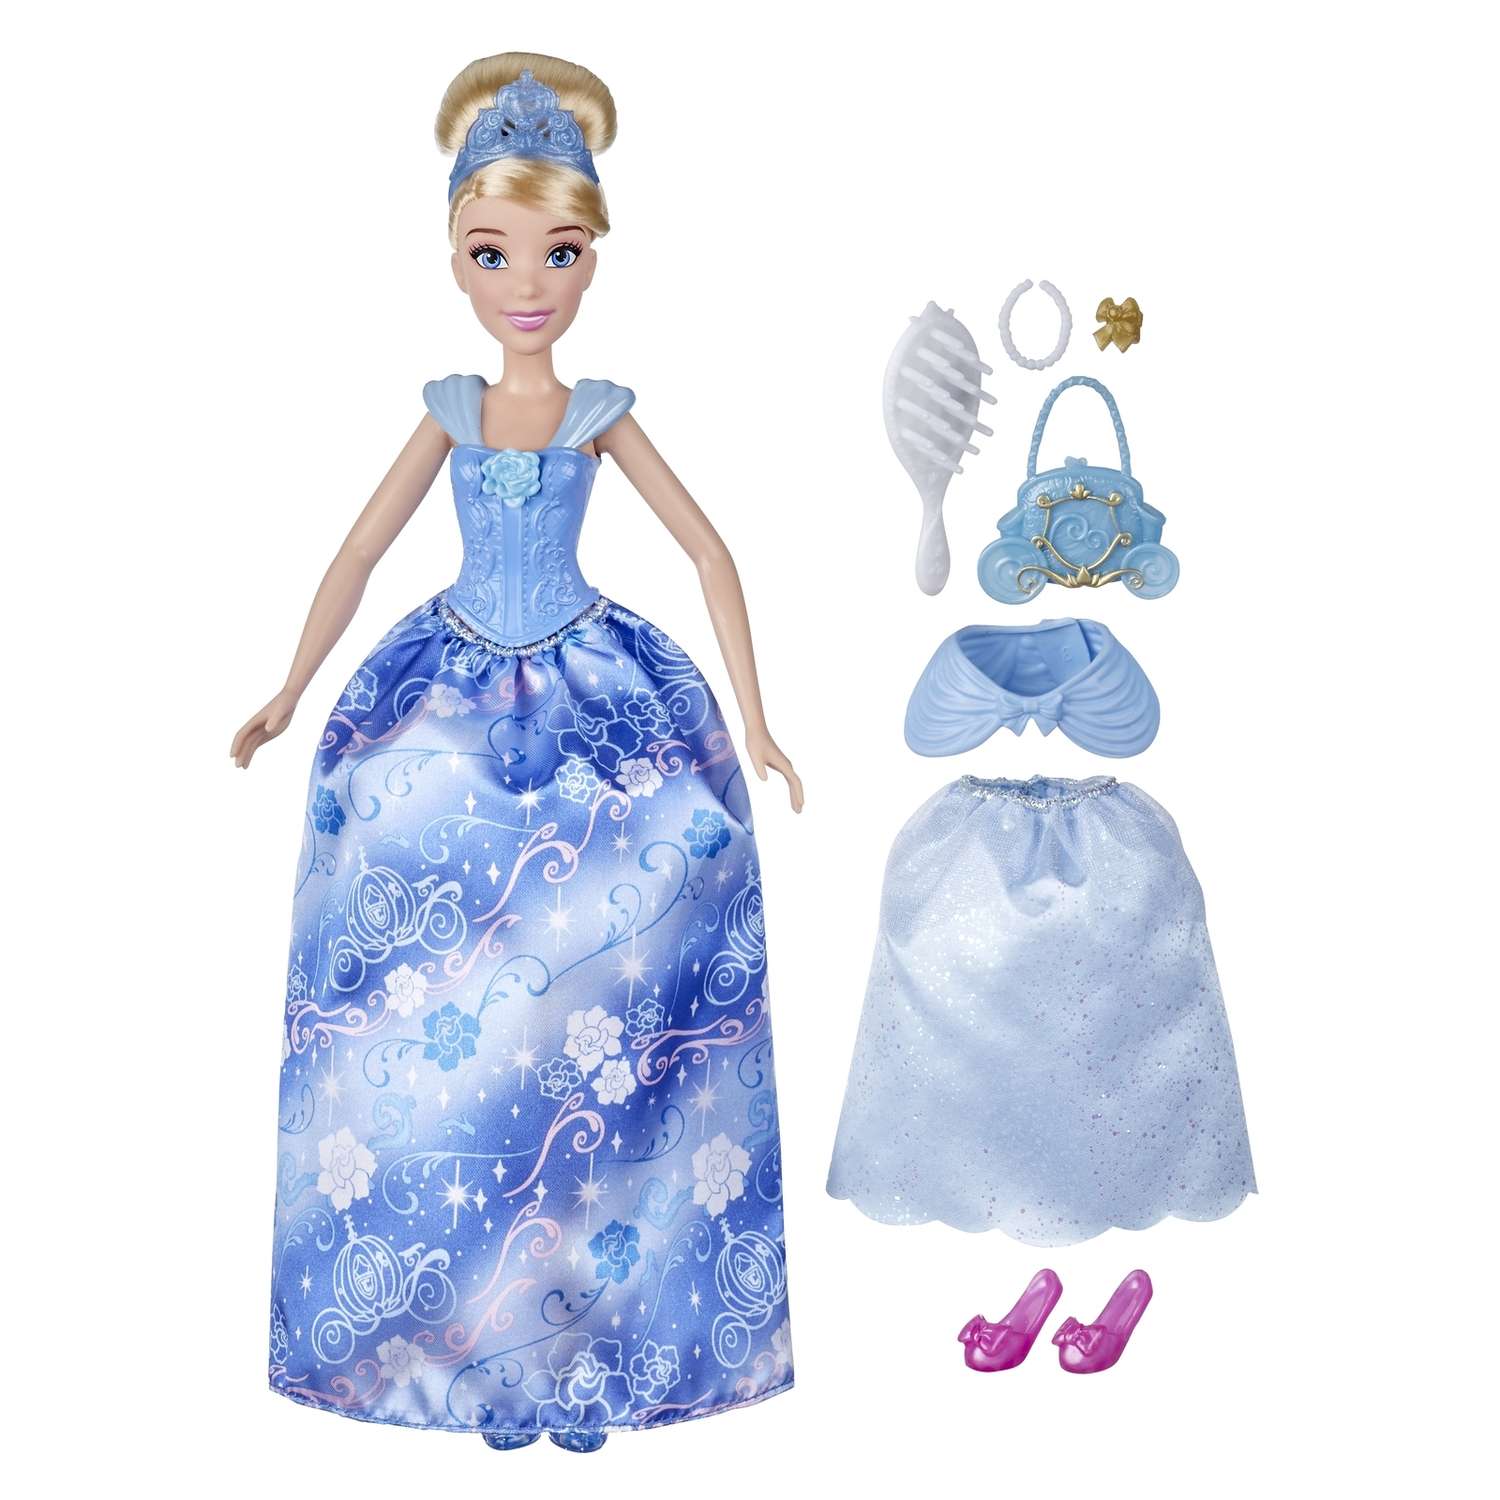 Кукла Disney Princess Hasbro Золушка в платье с кармашками F02845L0 F01585L0 - фото 1